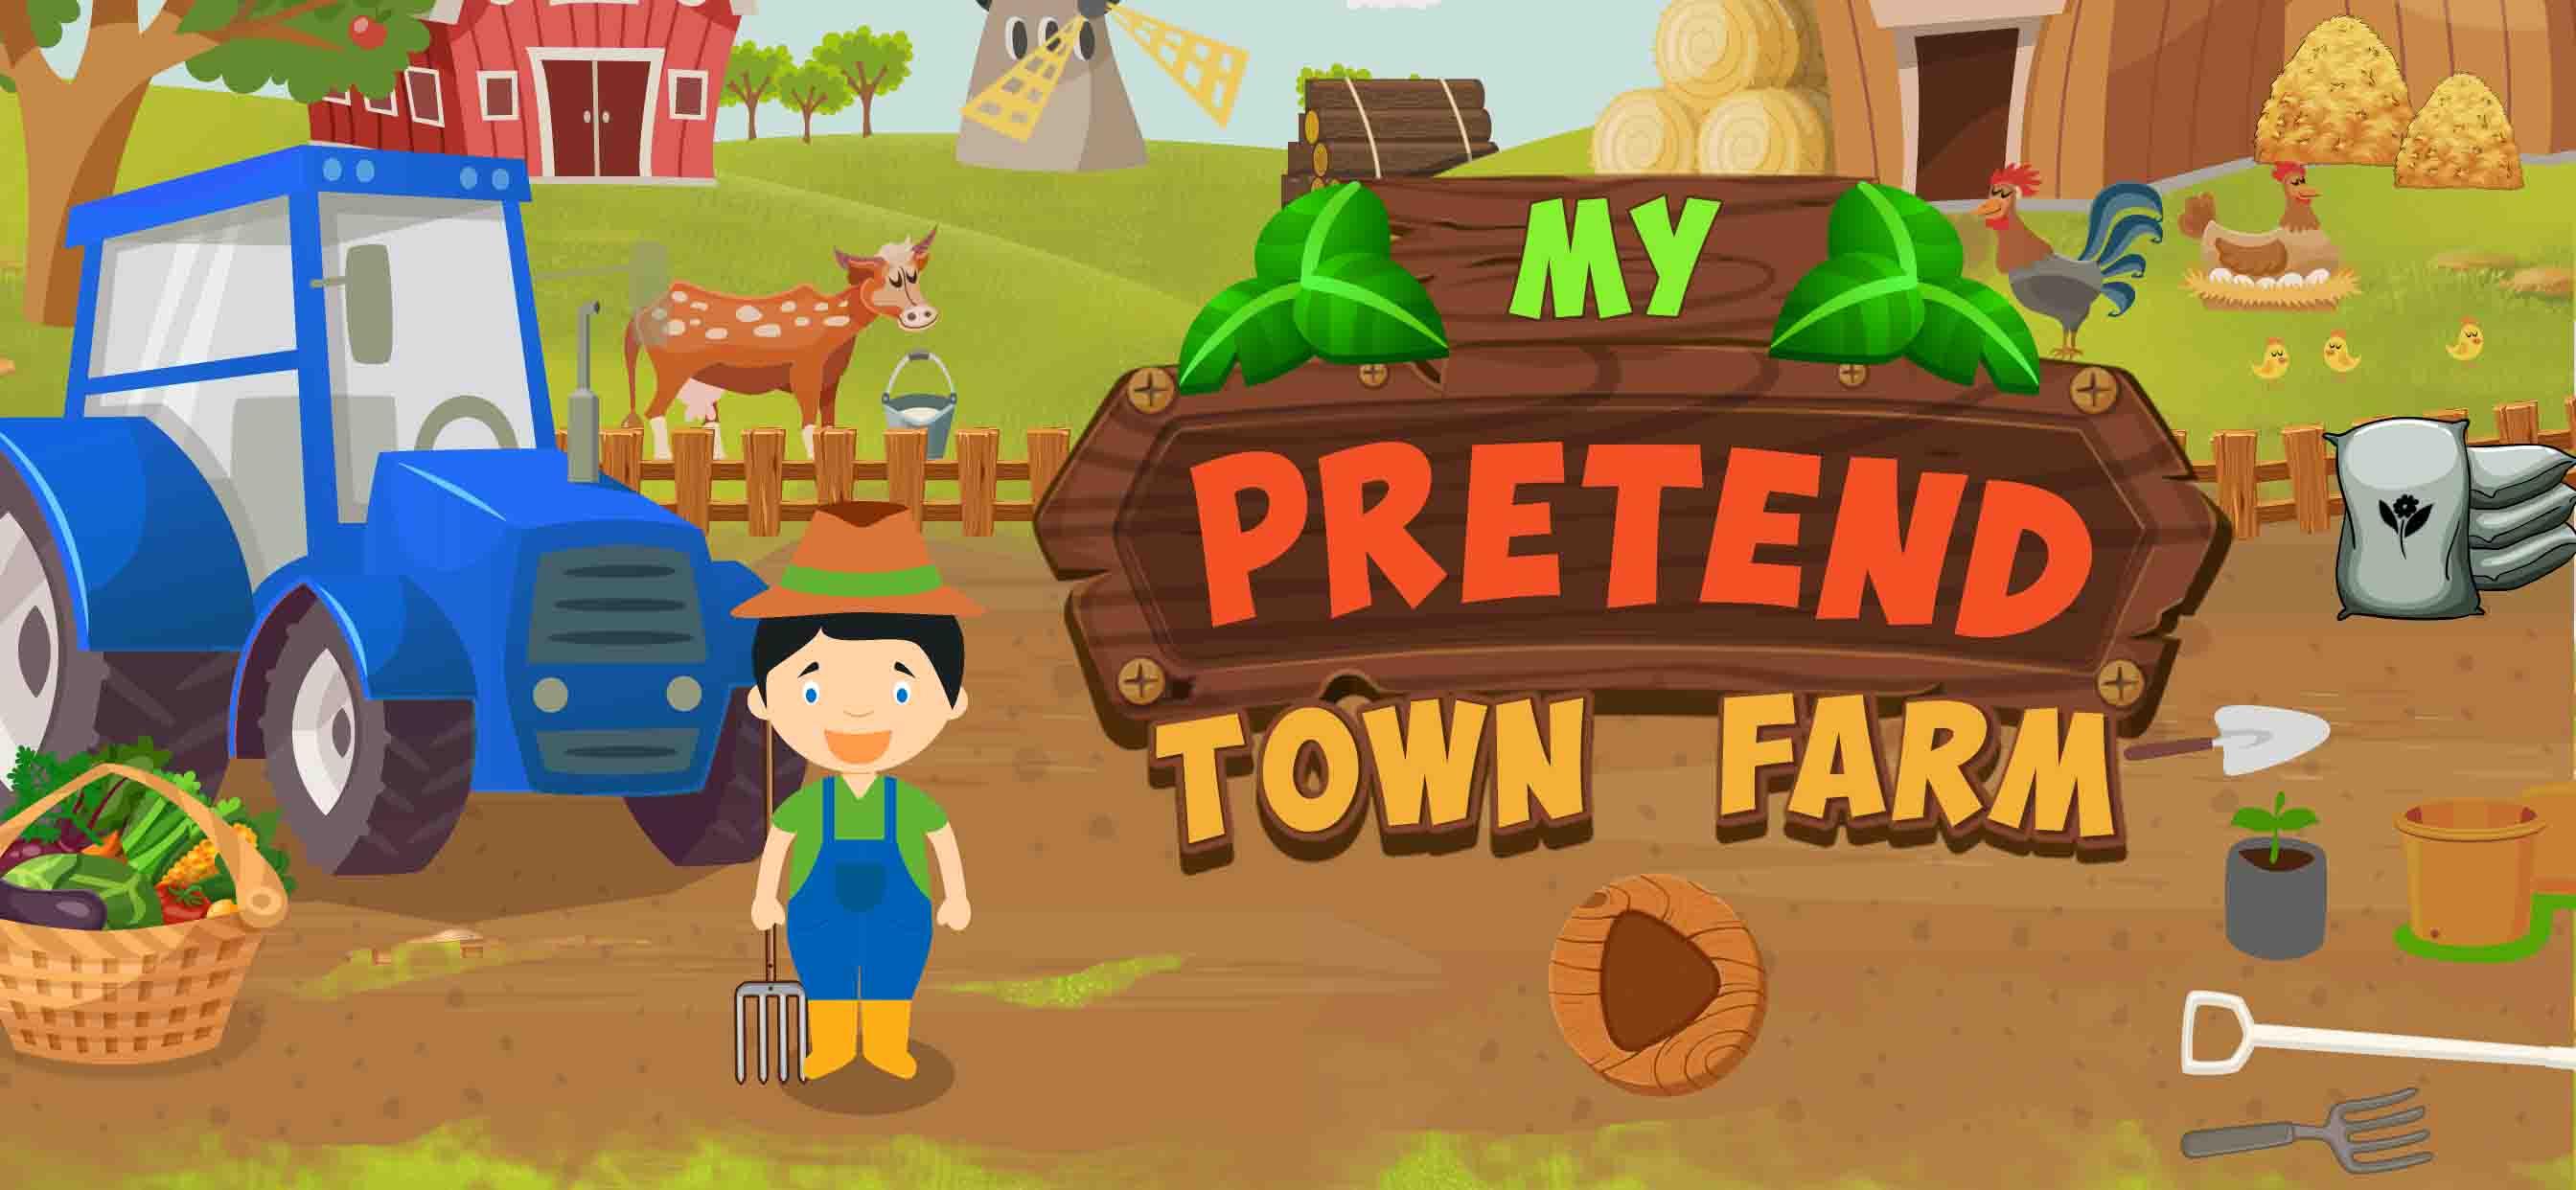 Pretend Town Farm House: Explore Farming World 1.1 Screenshot 6